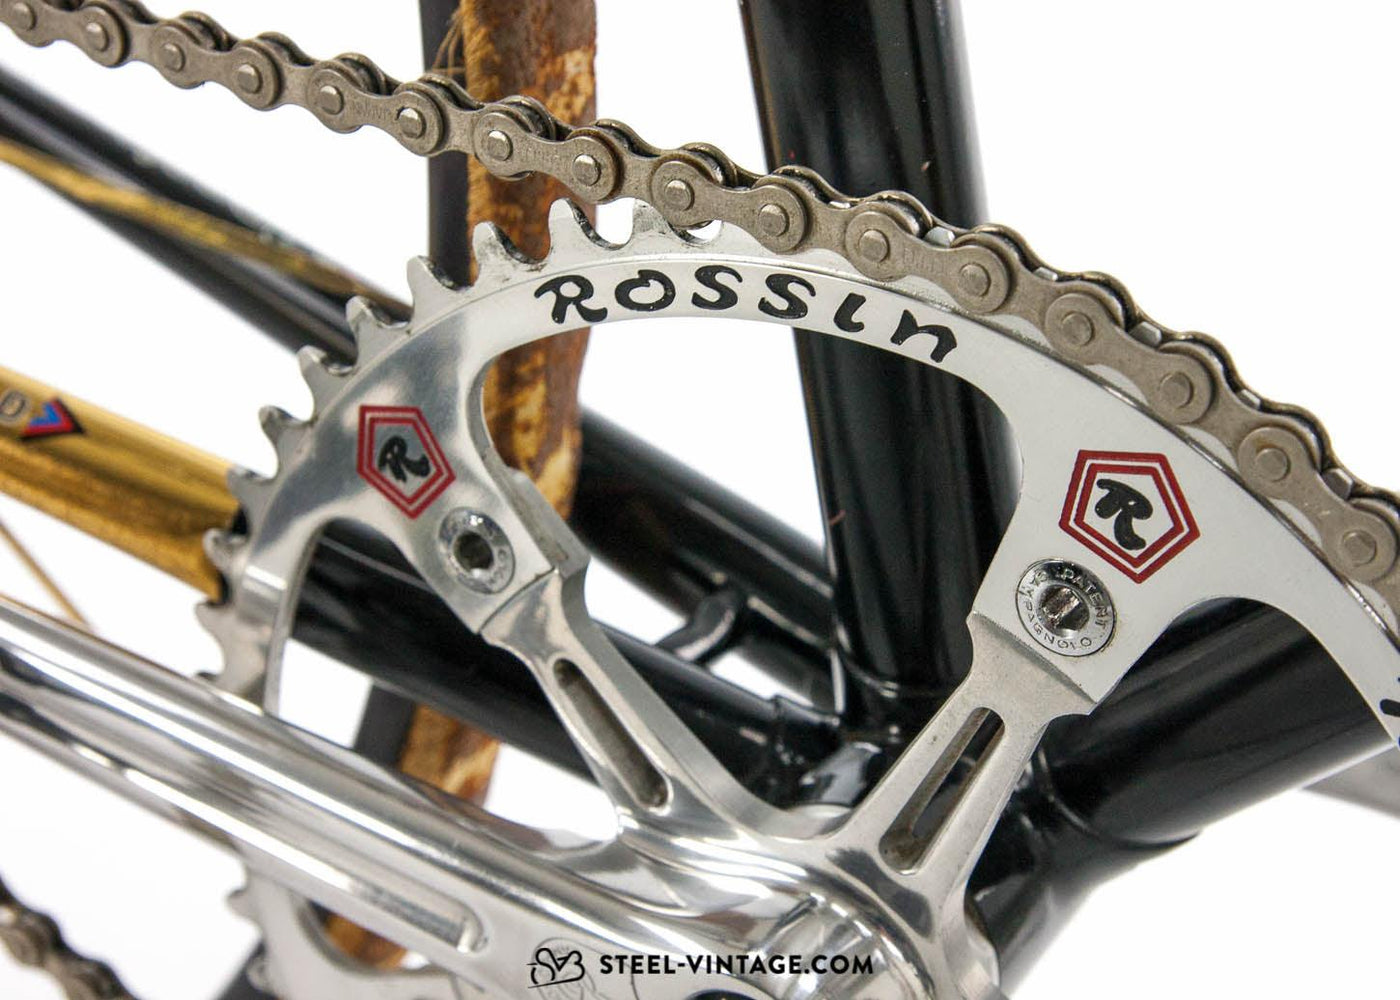 Rossin Super Record Pista Vent Noir 1980 - Steel Vintage Bikes